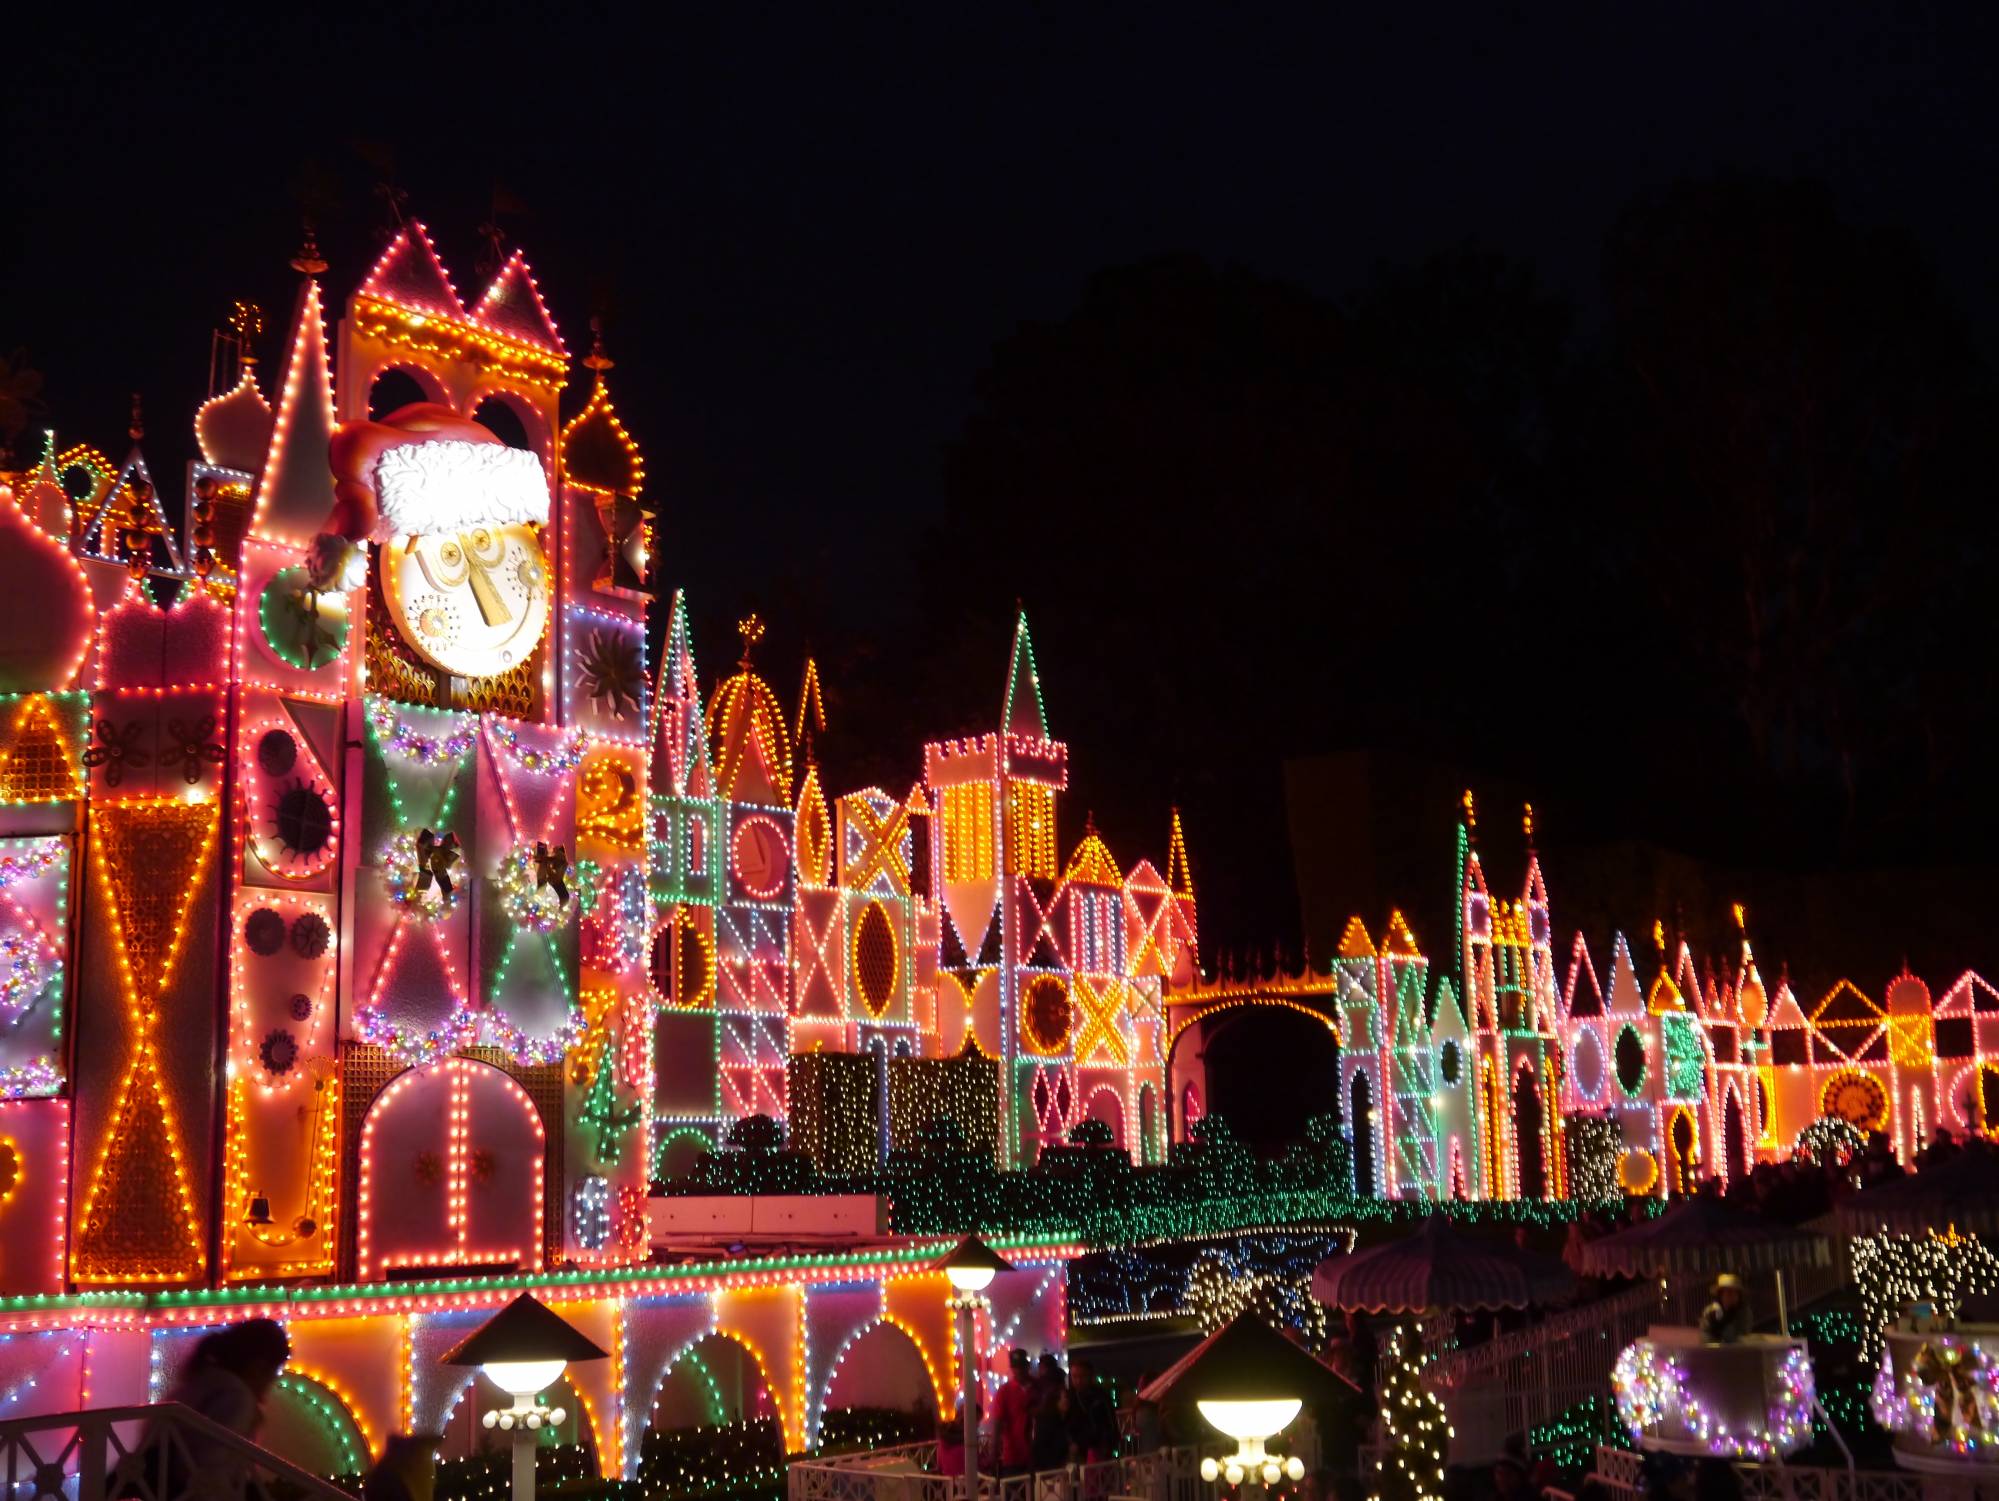 Enjoy the holidays at Disneyland |PassPorter.com